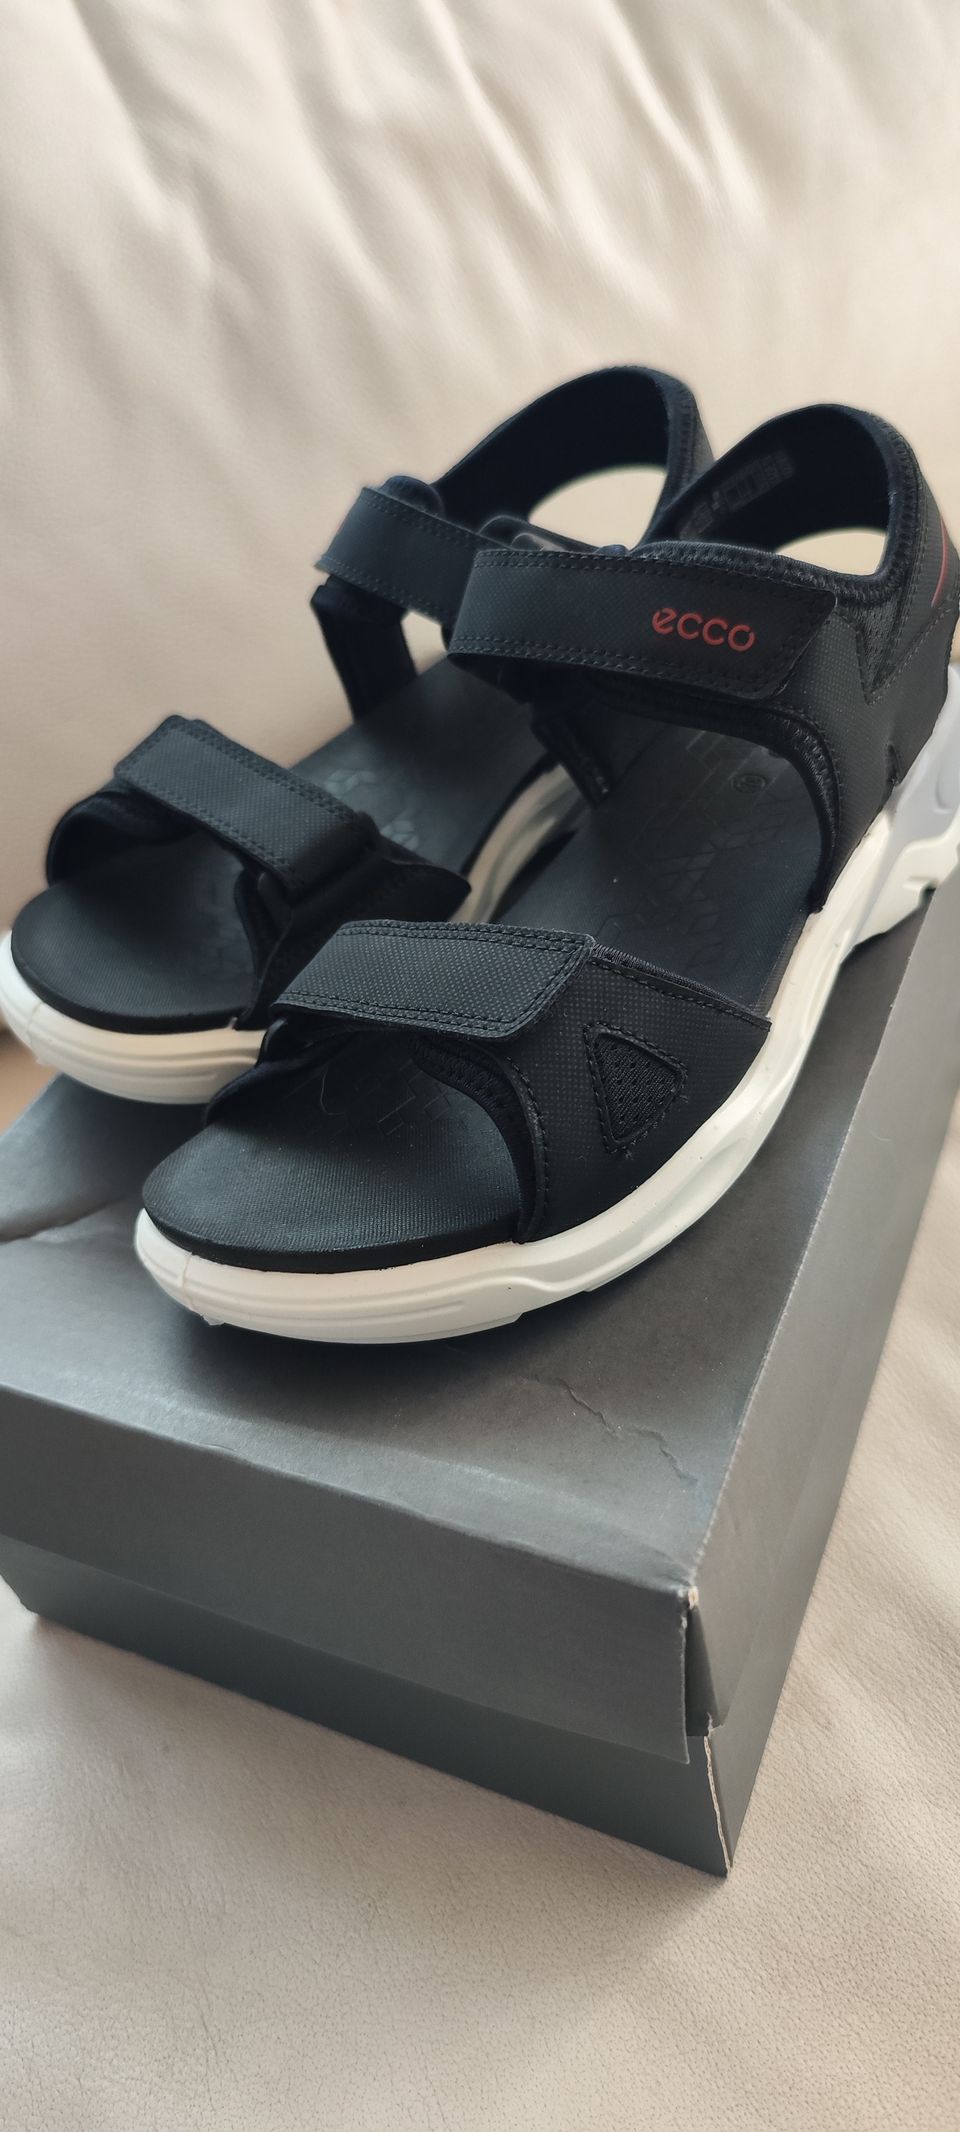 Mustat Ecco sandaalit koko 38, uudet